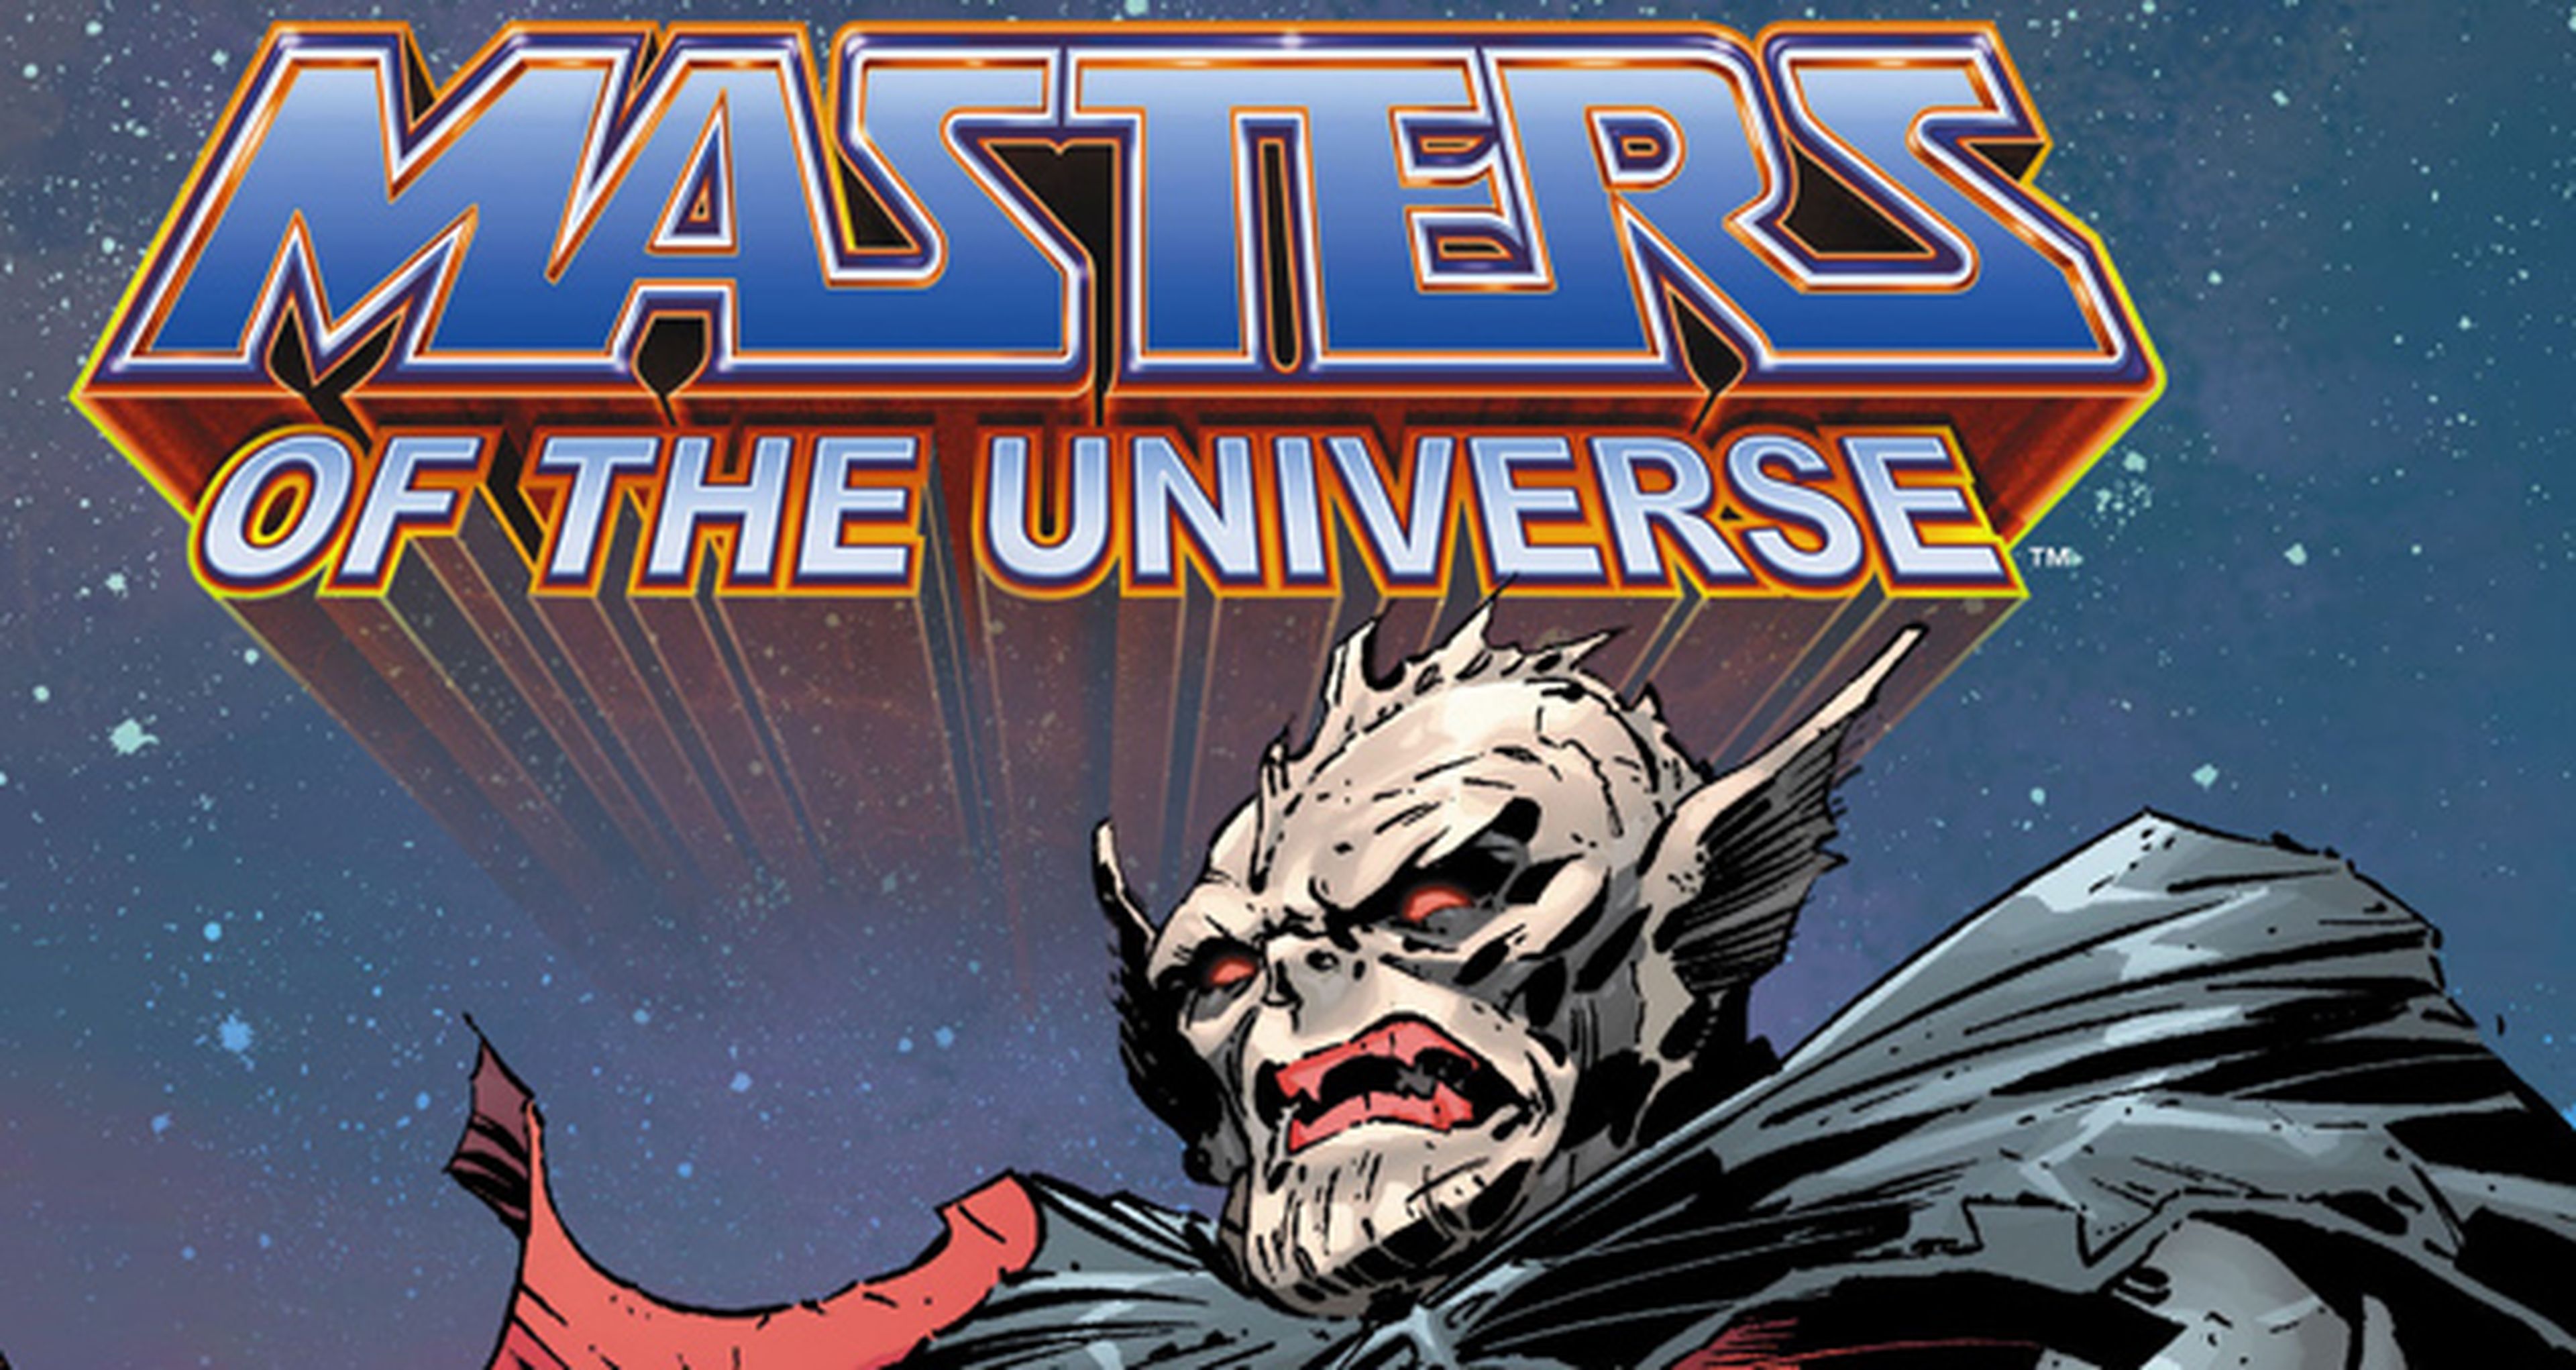 EEUU: El origen de Hordak en Masters of the Universe